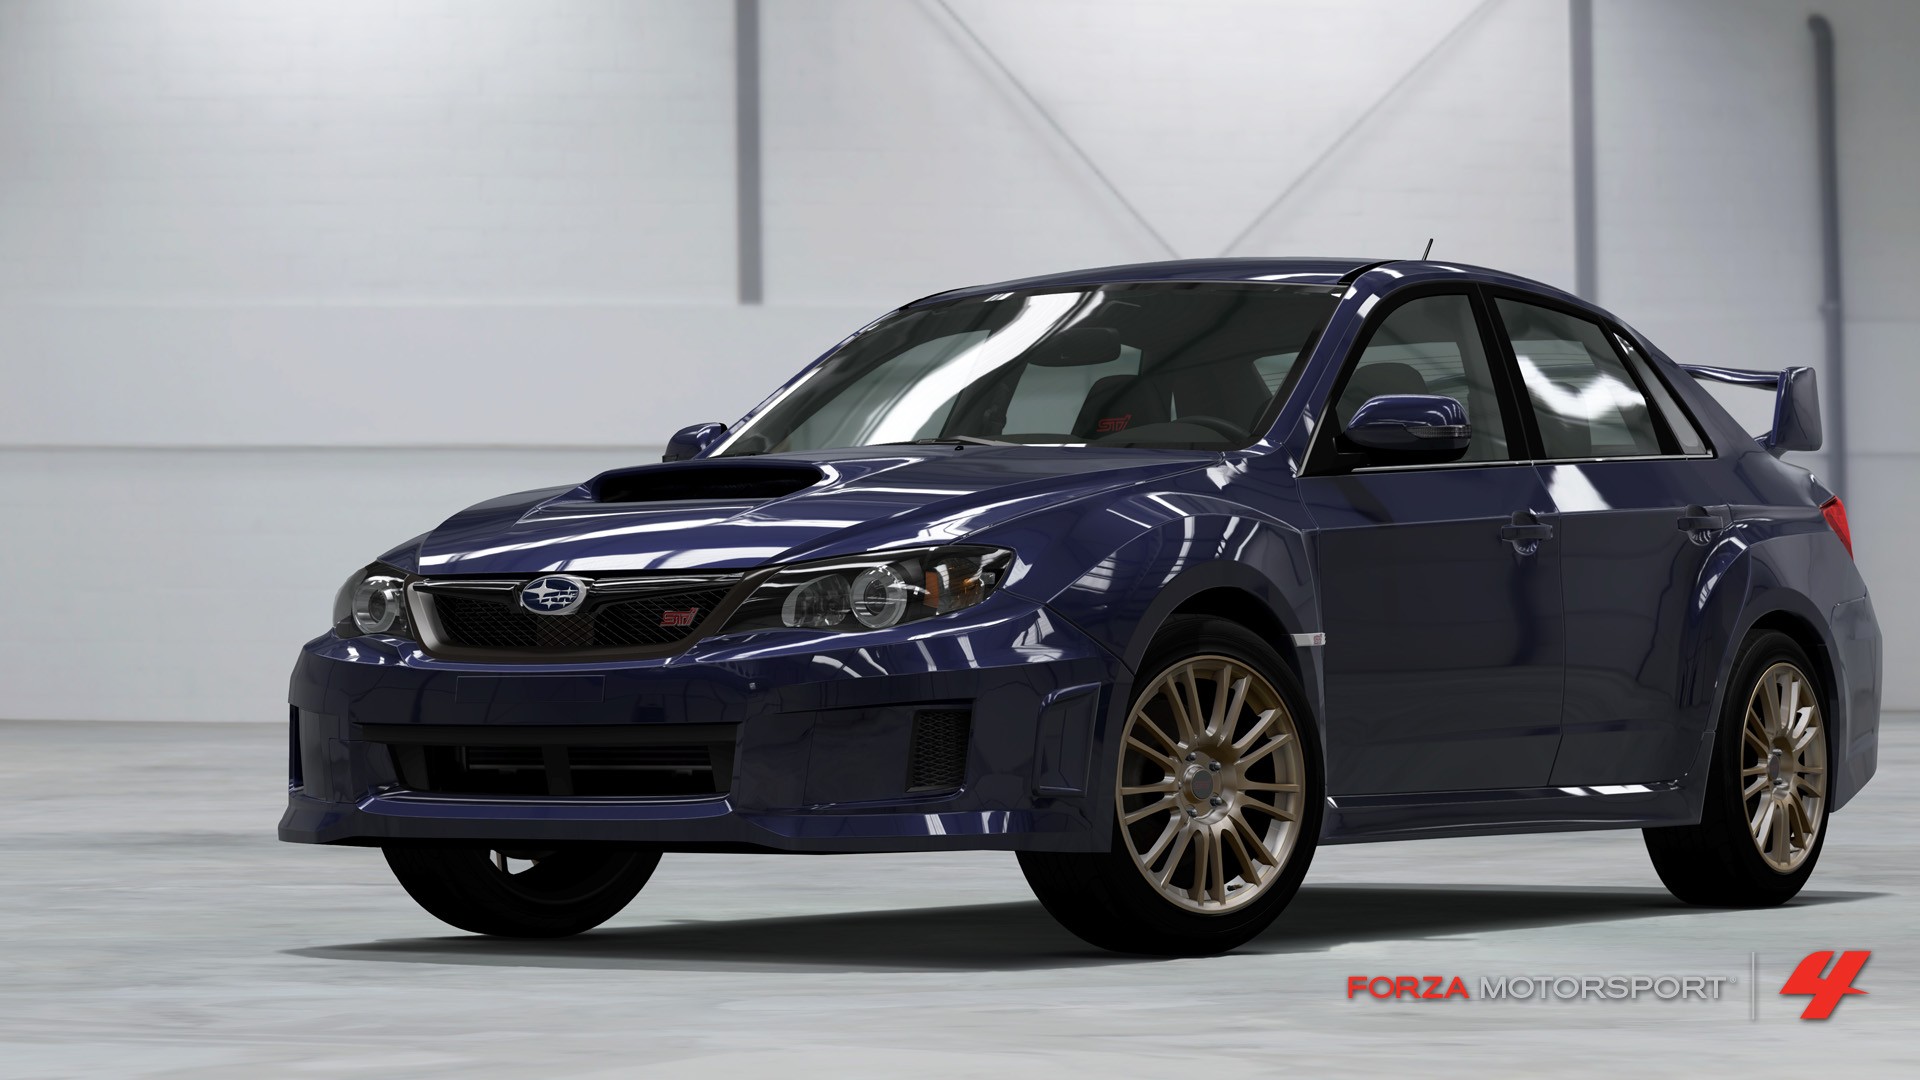 Forza Motorsport, Forza Motorsport 4, Car, Subaru, Subaru WRX STI Wallpaper